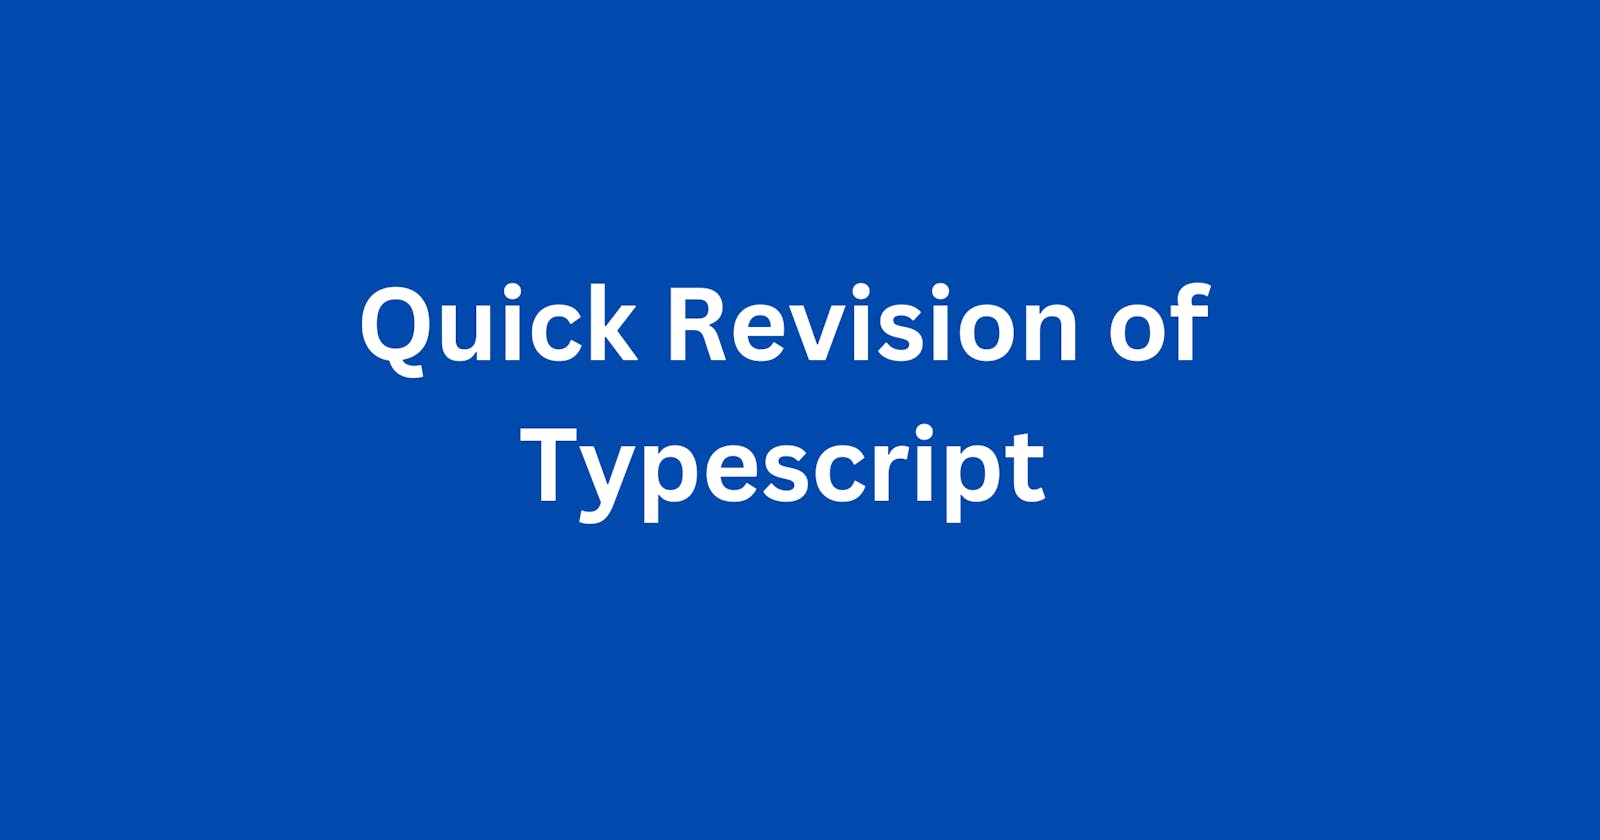 Quick Revision of typescript